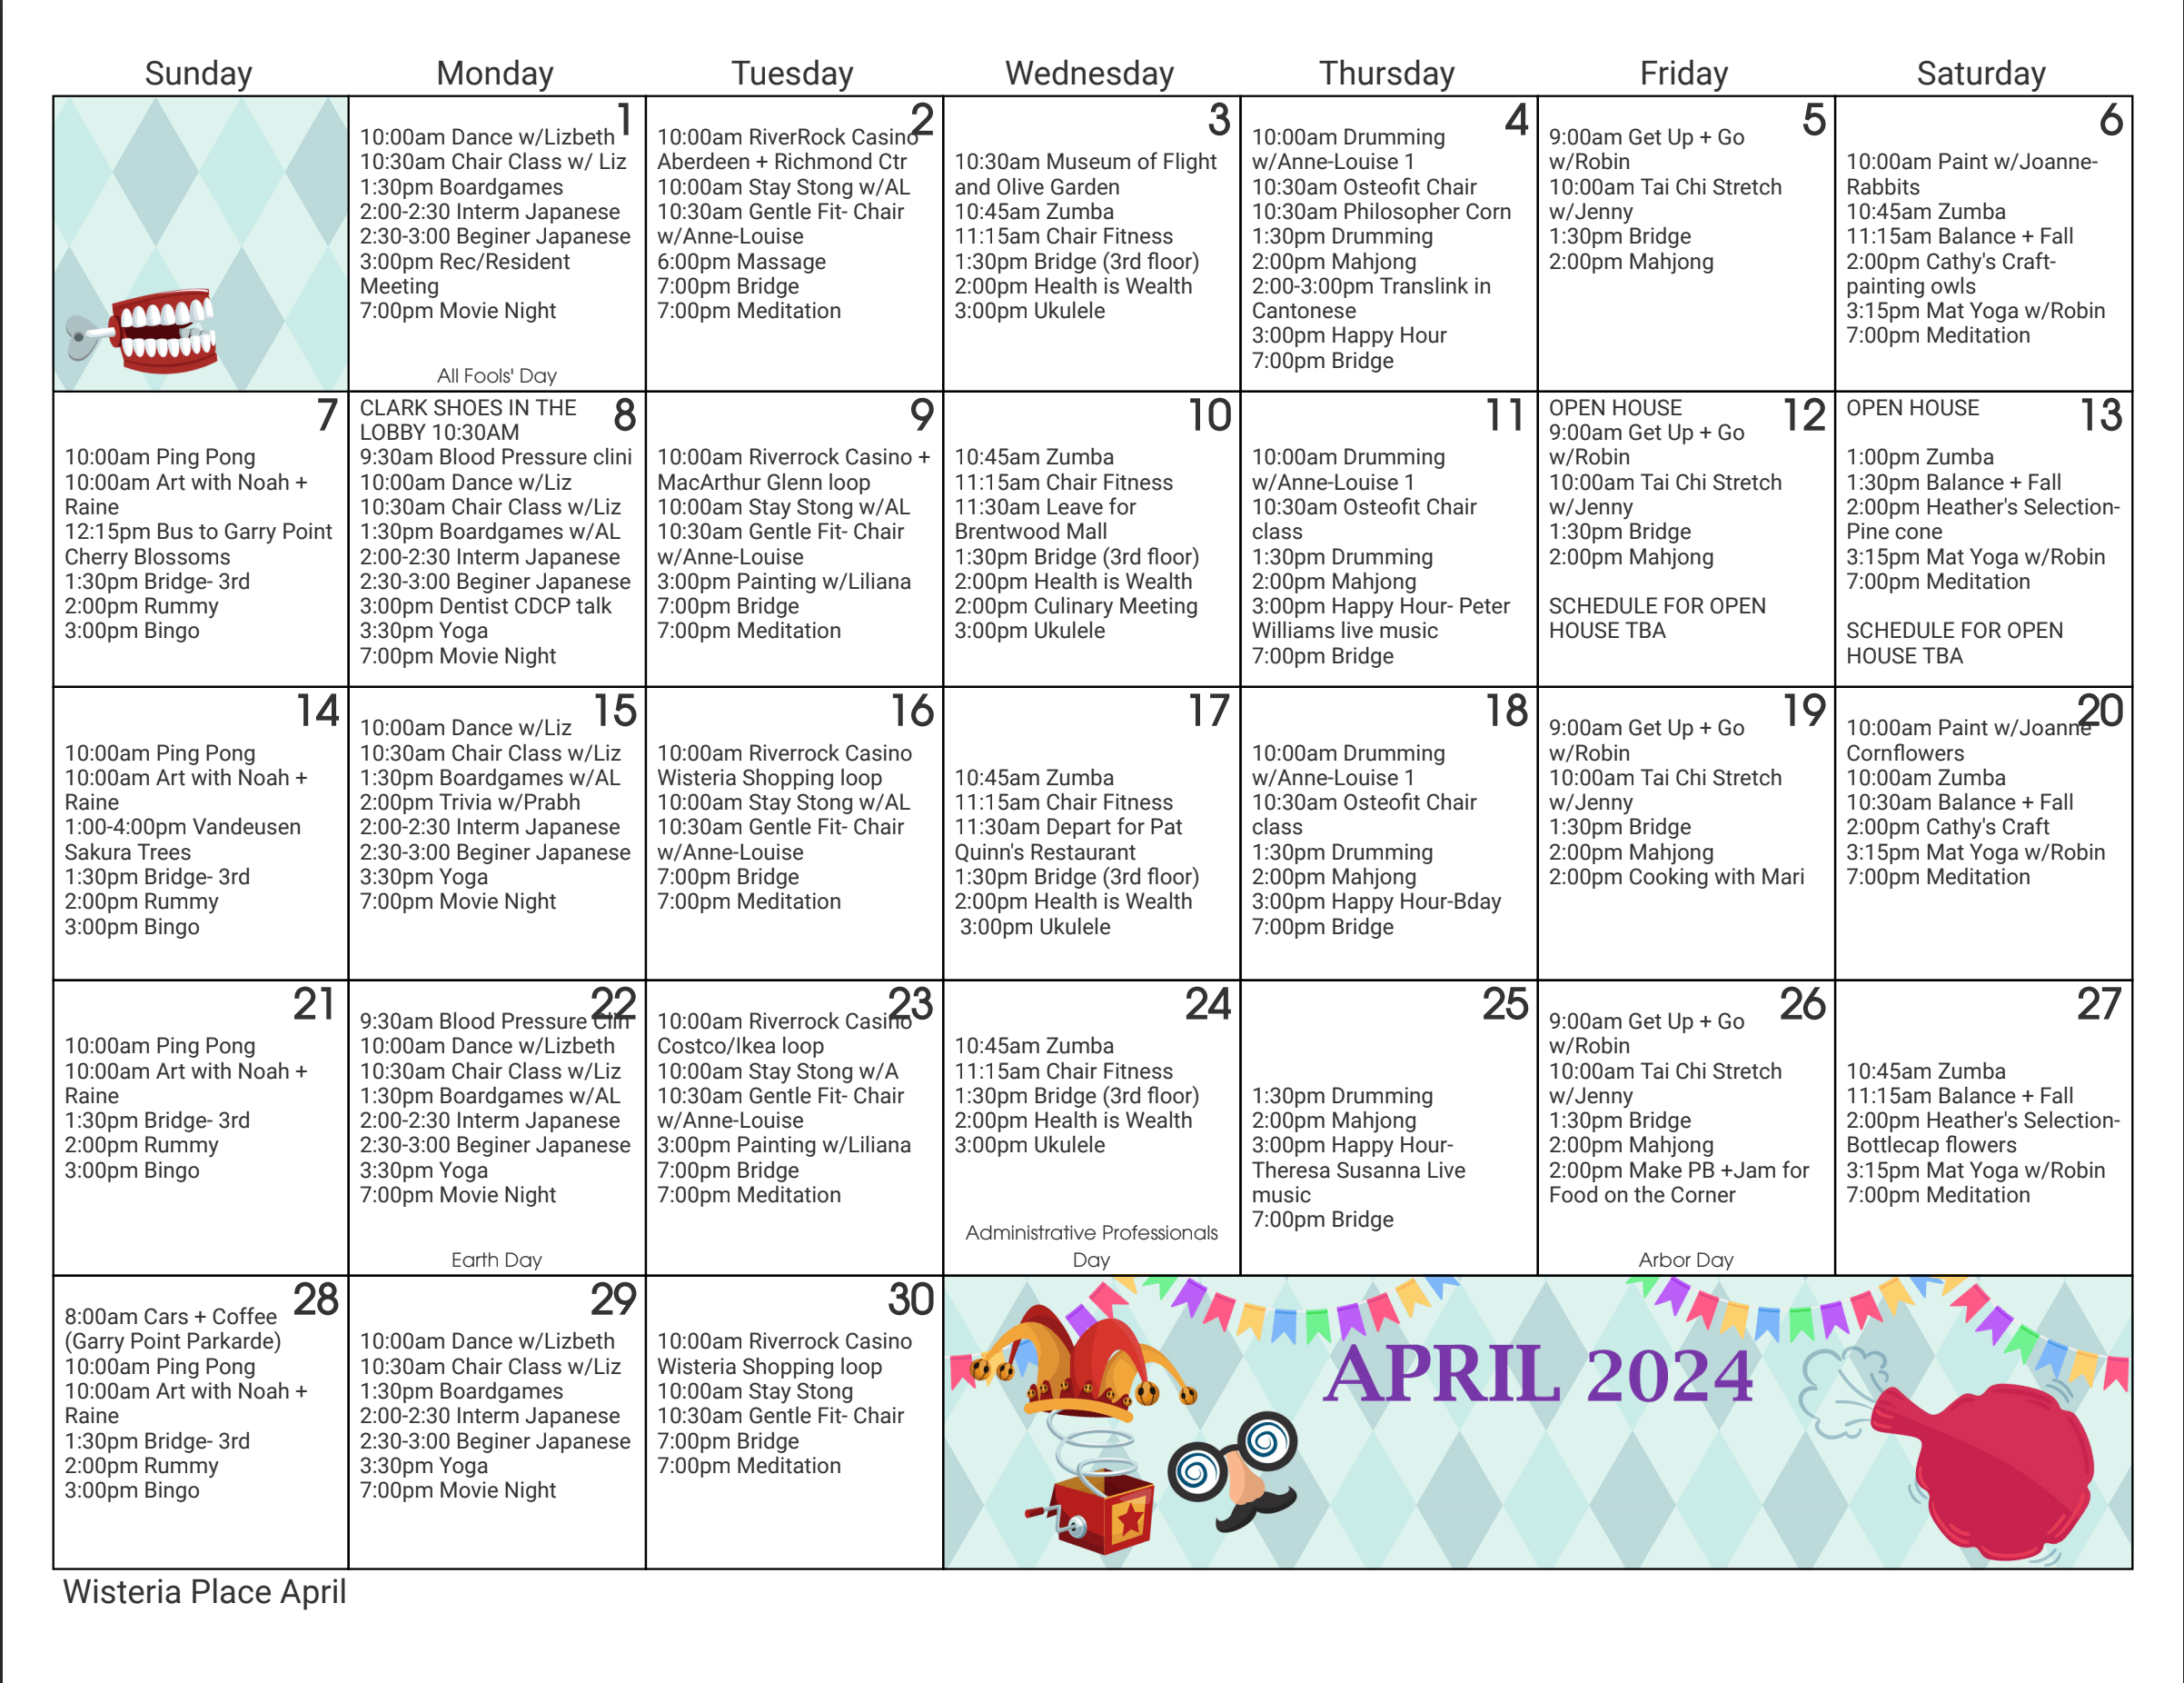 Wisteria Place April 2024 event calendar